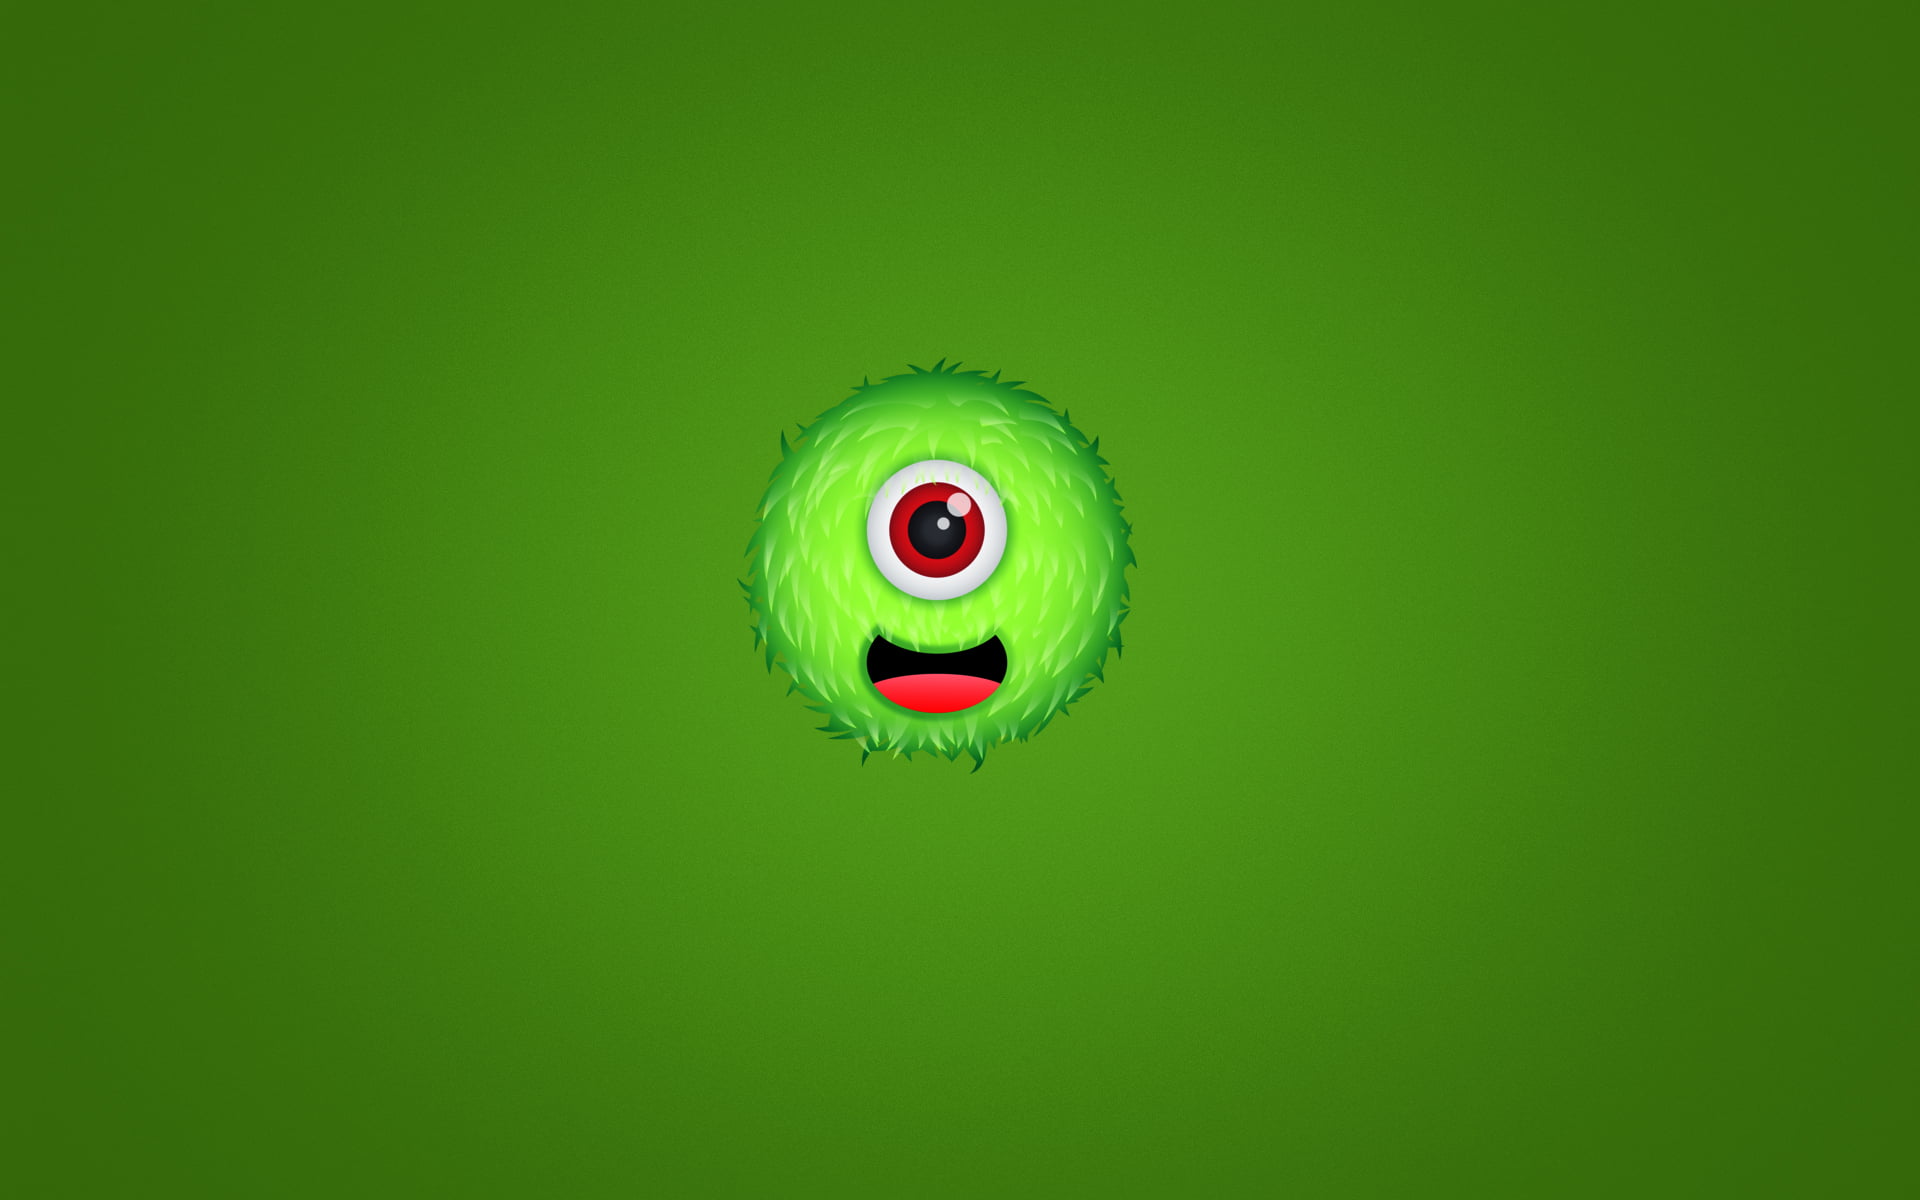 green one-eyed character illustration, smile, monster, hairy